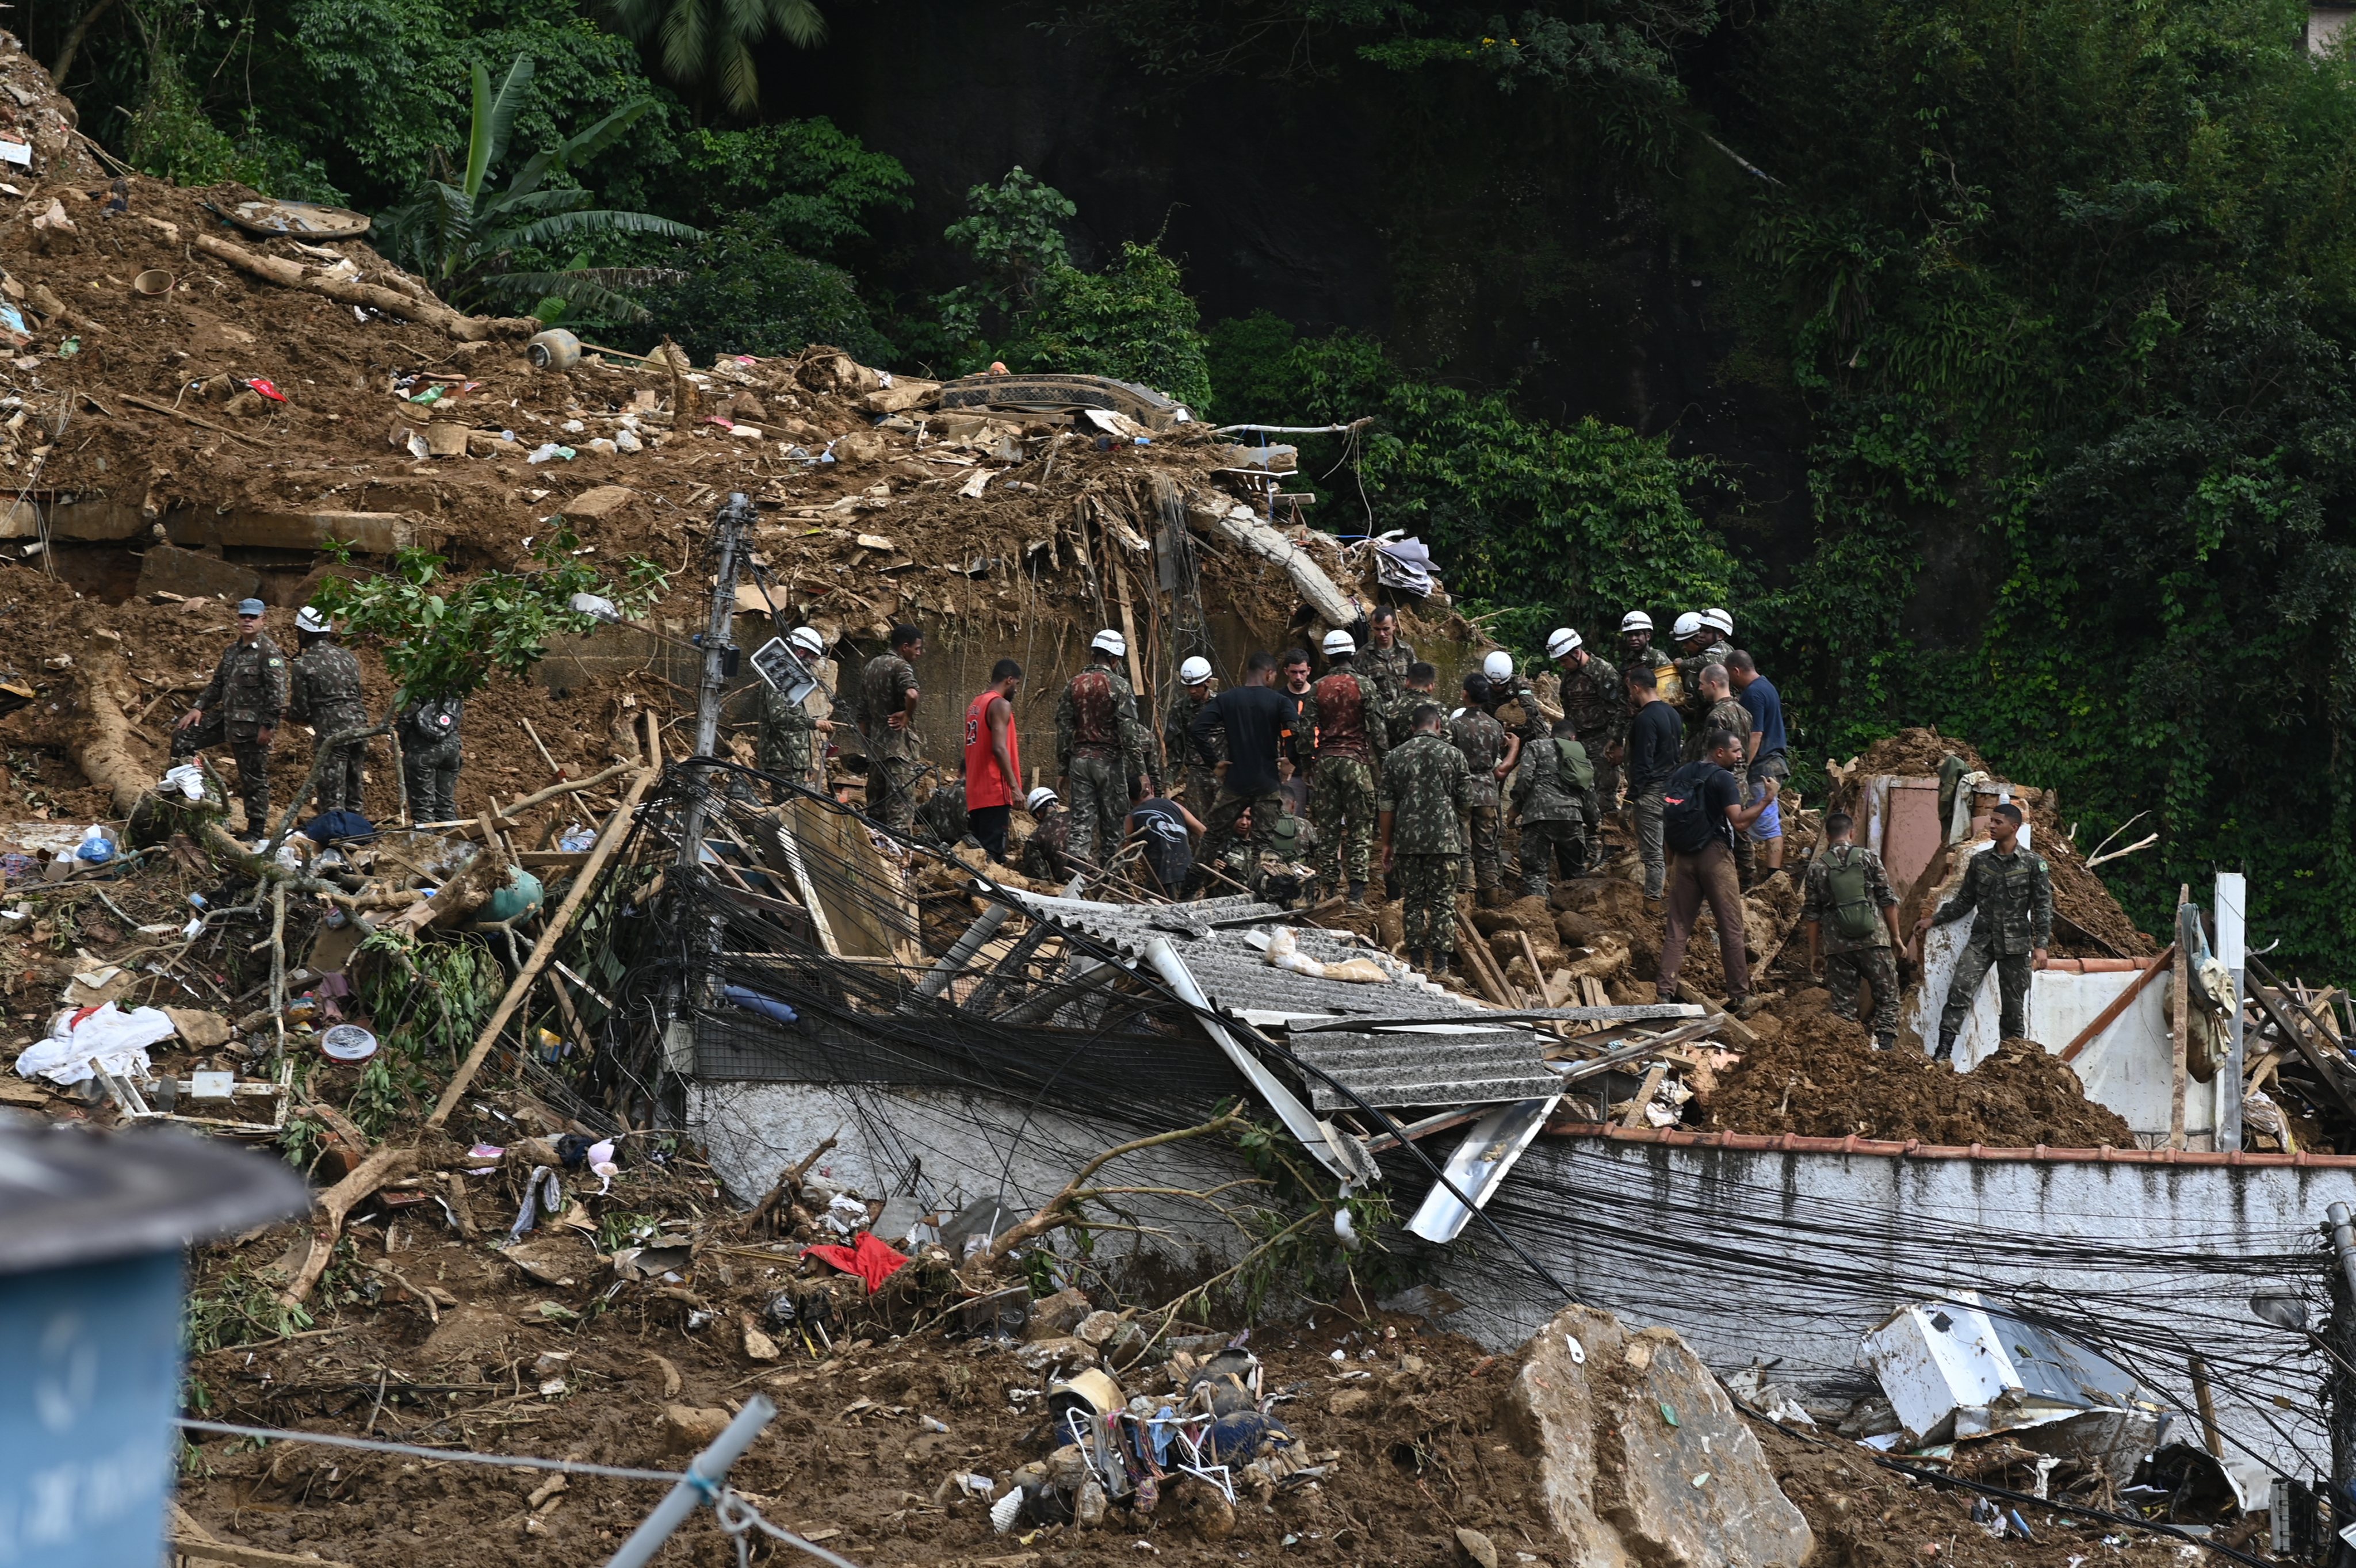 Deaths from rain and landslides near Rio de Janeiro